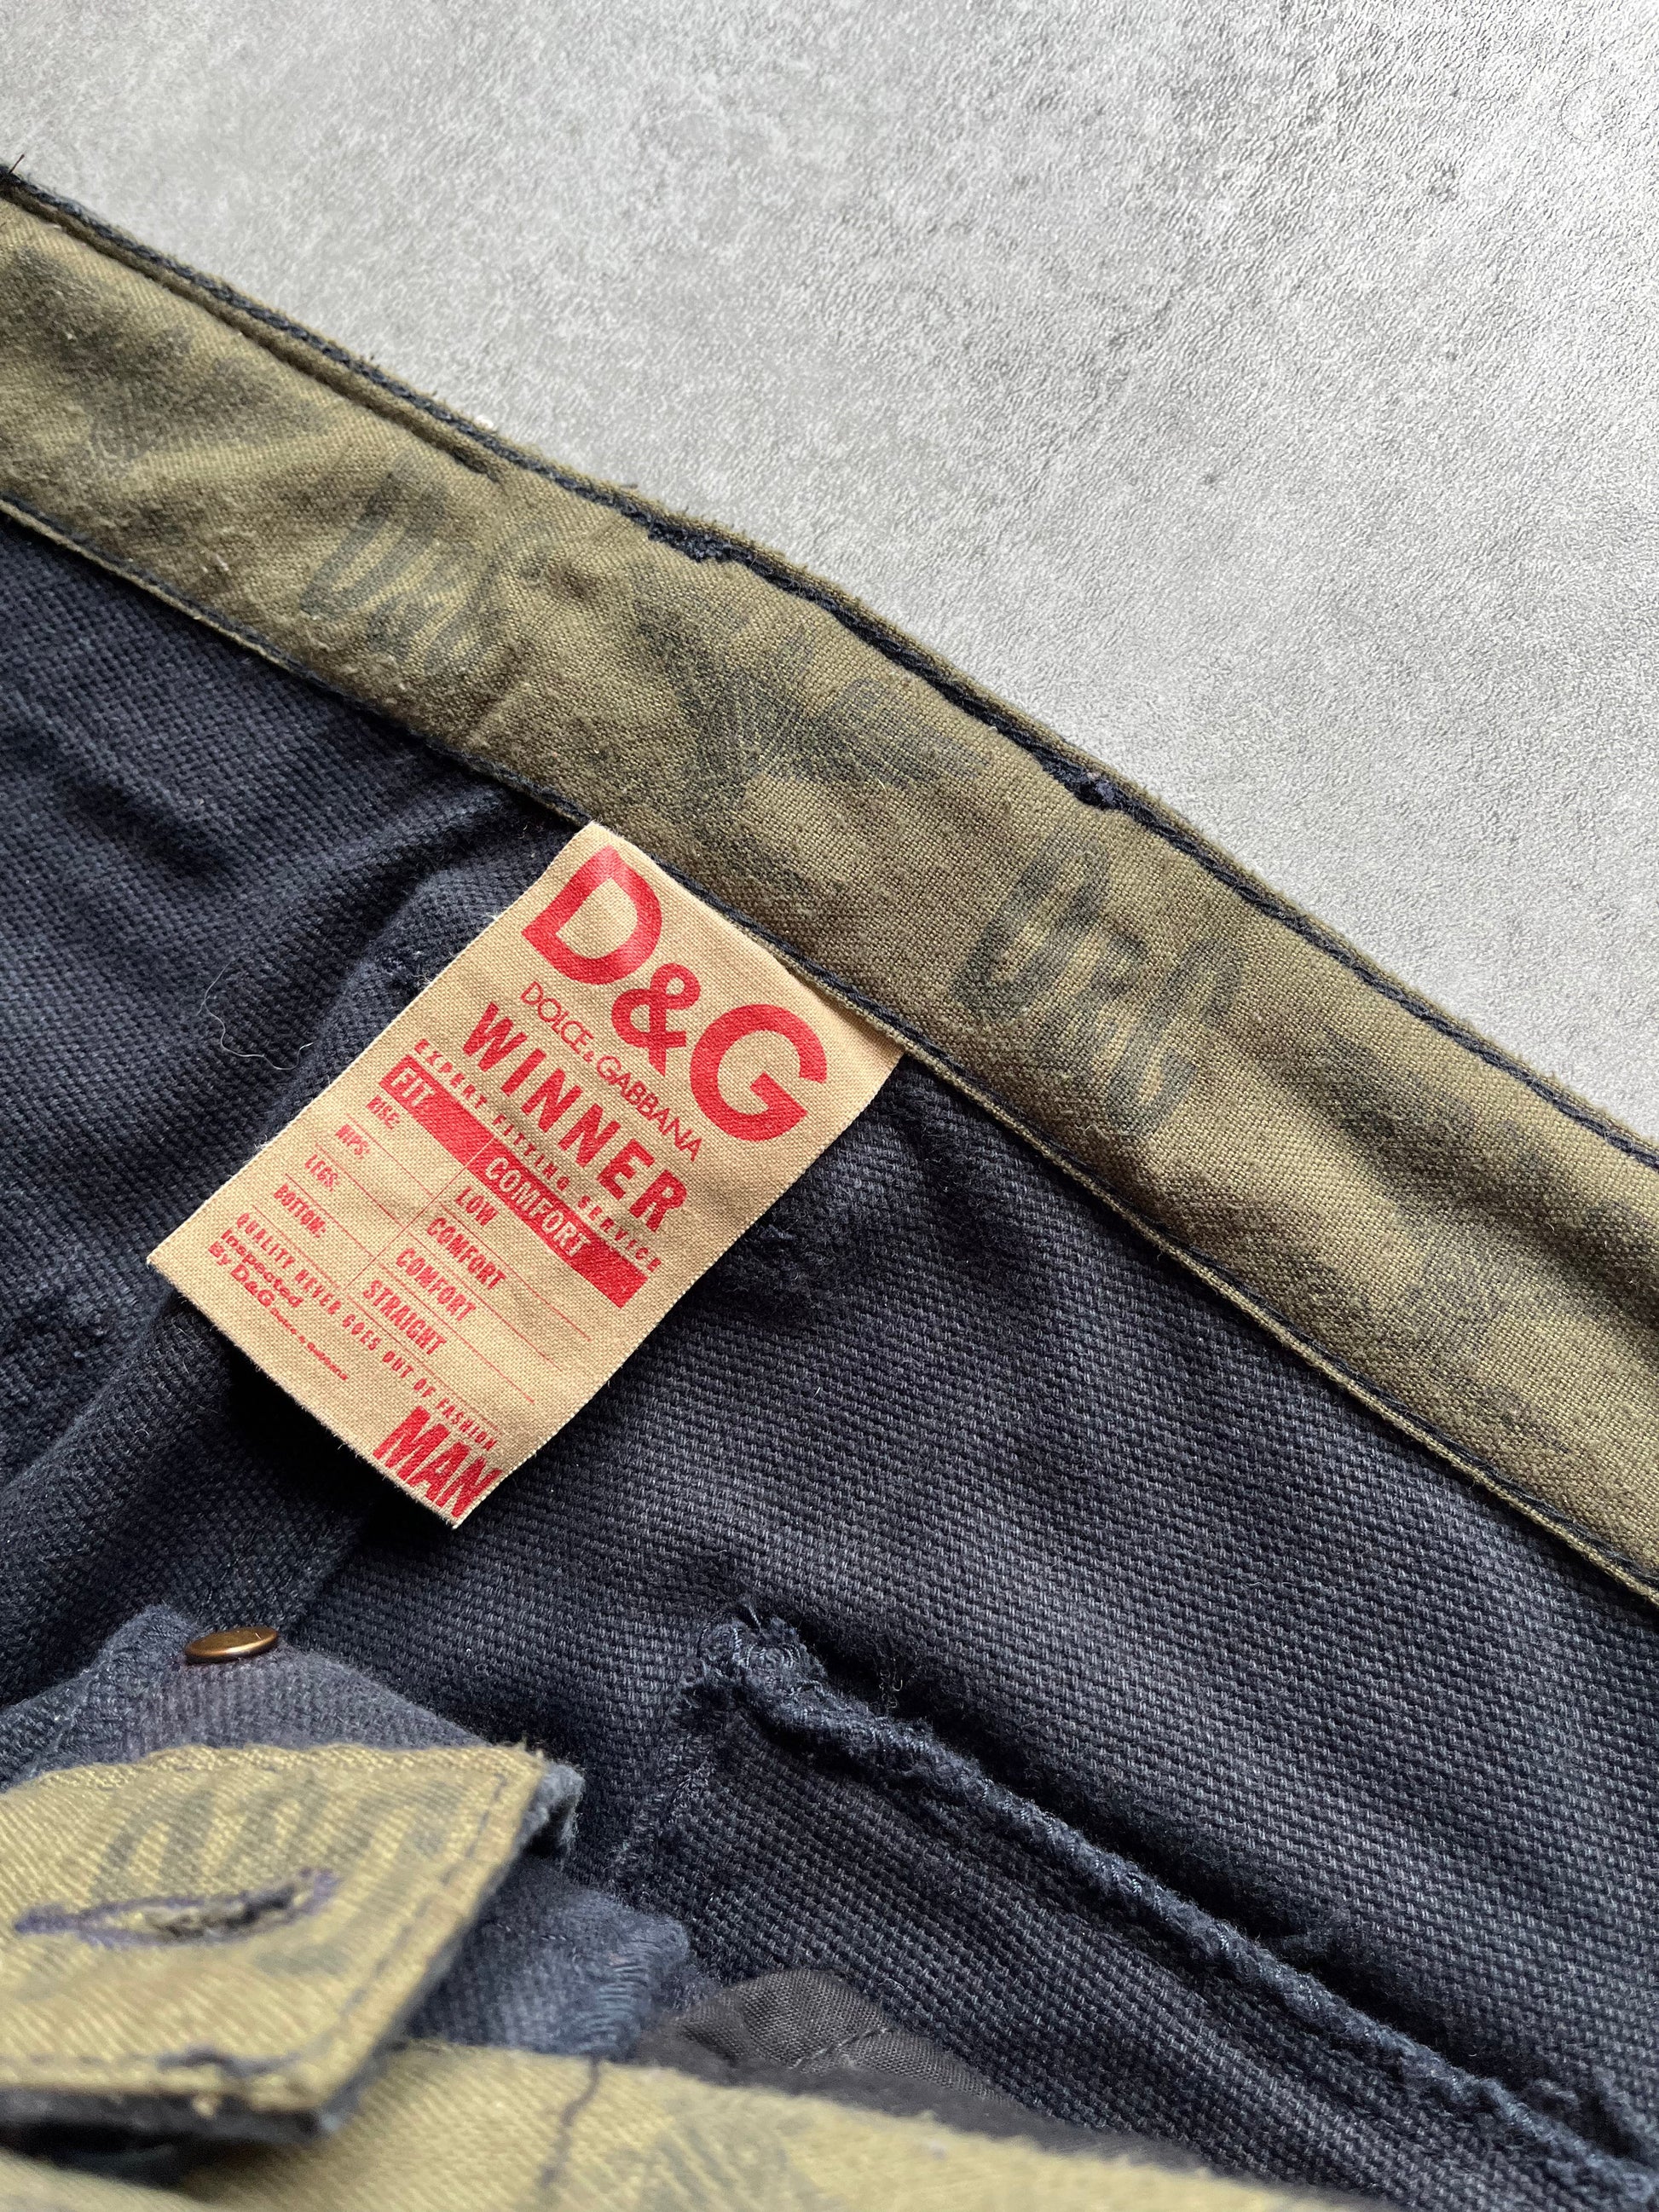 AW2006 Dolce & Gabbana Army Navy Naval Cargo Pants (L) - 7